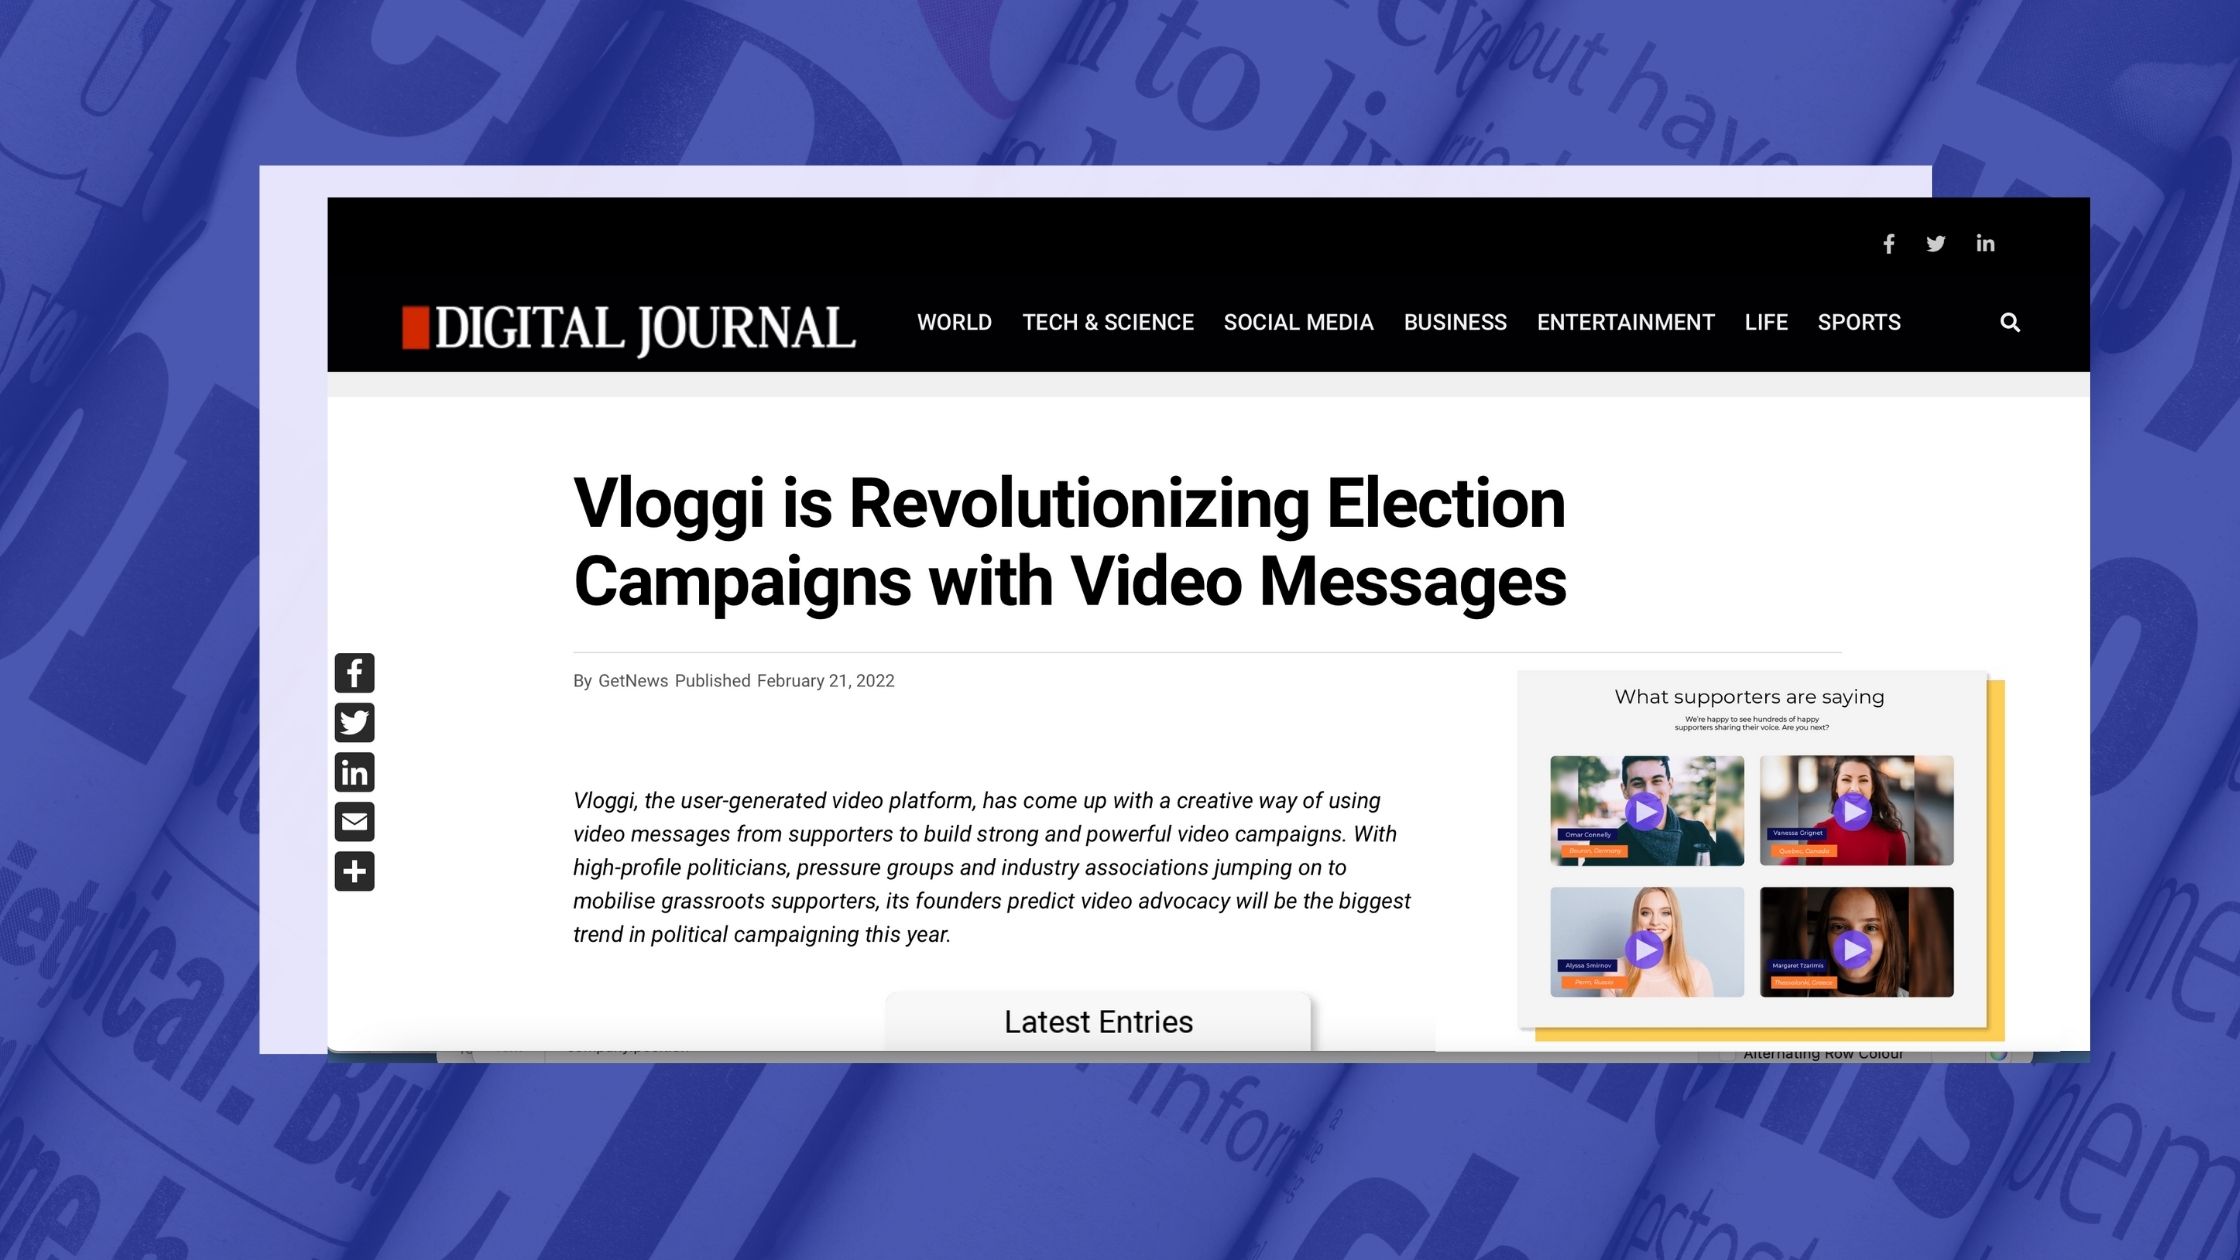 Vloggi-is-Revolutionizing-Election-Campaigns-through-Video-Digital-Journal-article.jpg